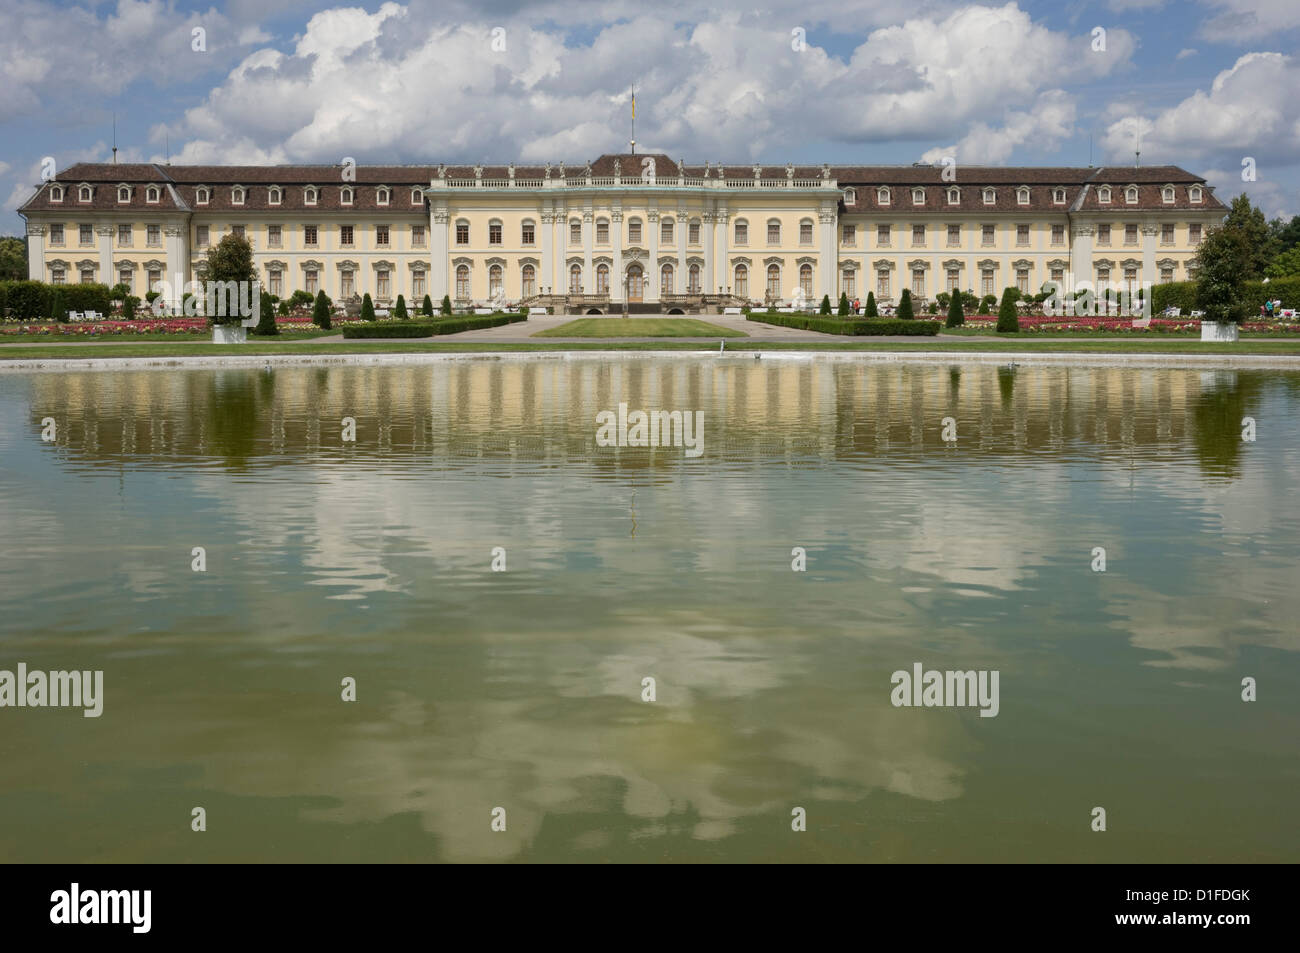 Das 18. Jahrhundert barocke Residenzschloss, inspiriert von Schloss Versailles, Ludwigsburg, Baden-Württemberg, Deutschland, Europa Stockfoto